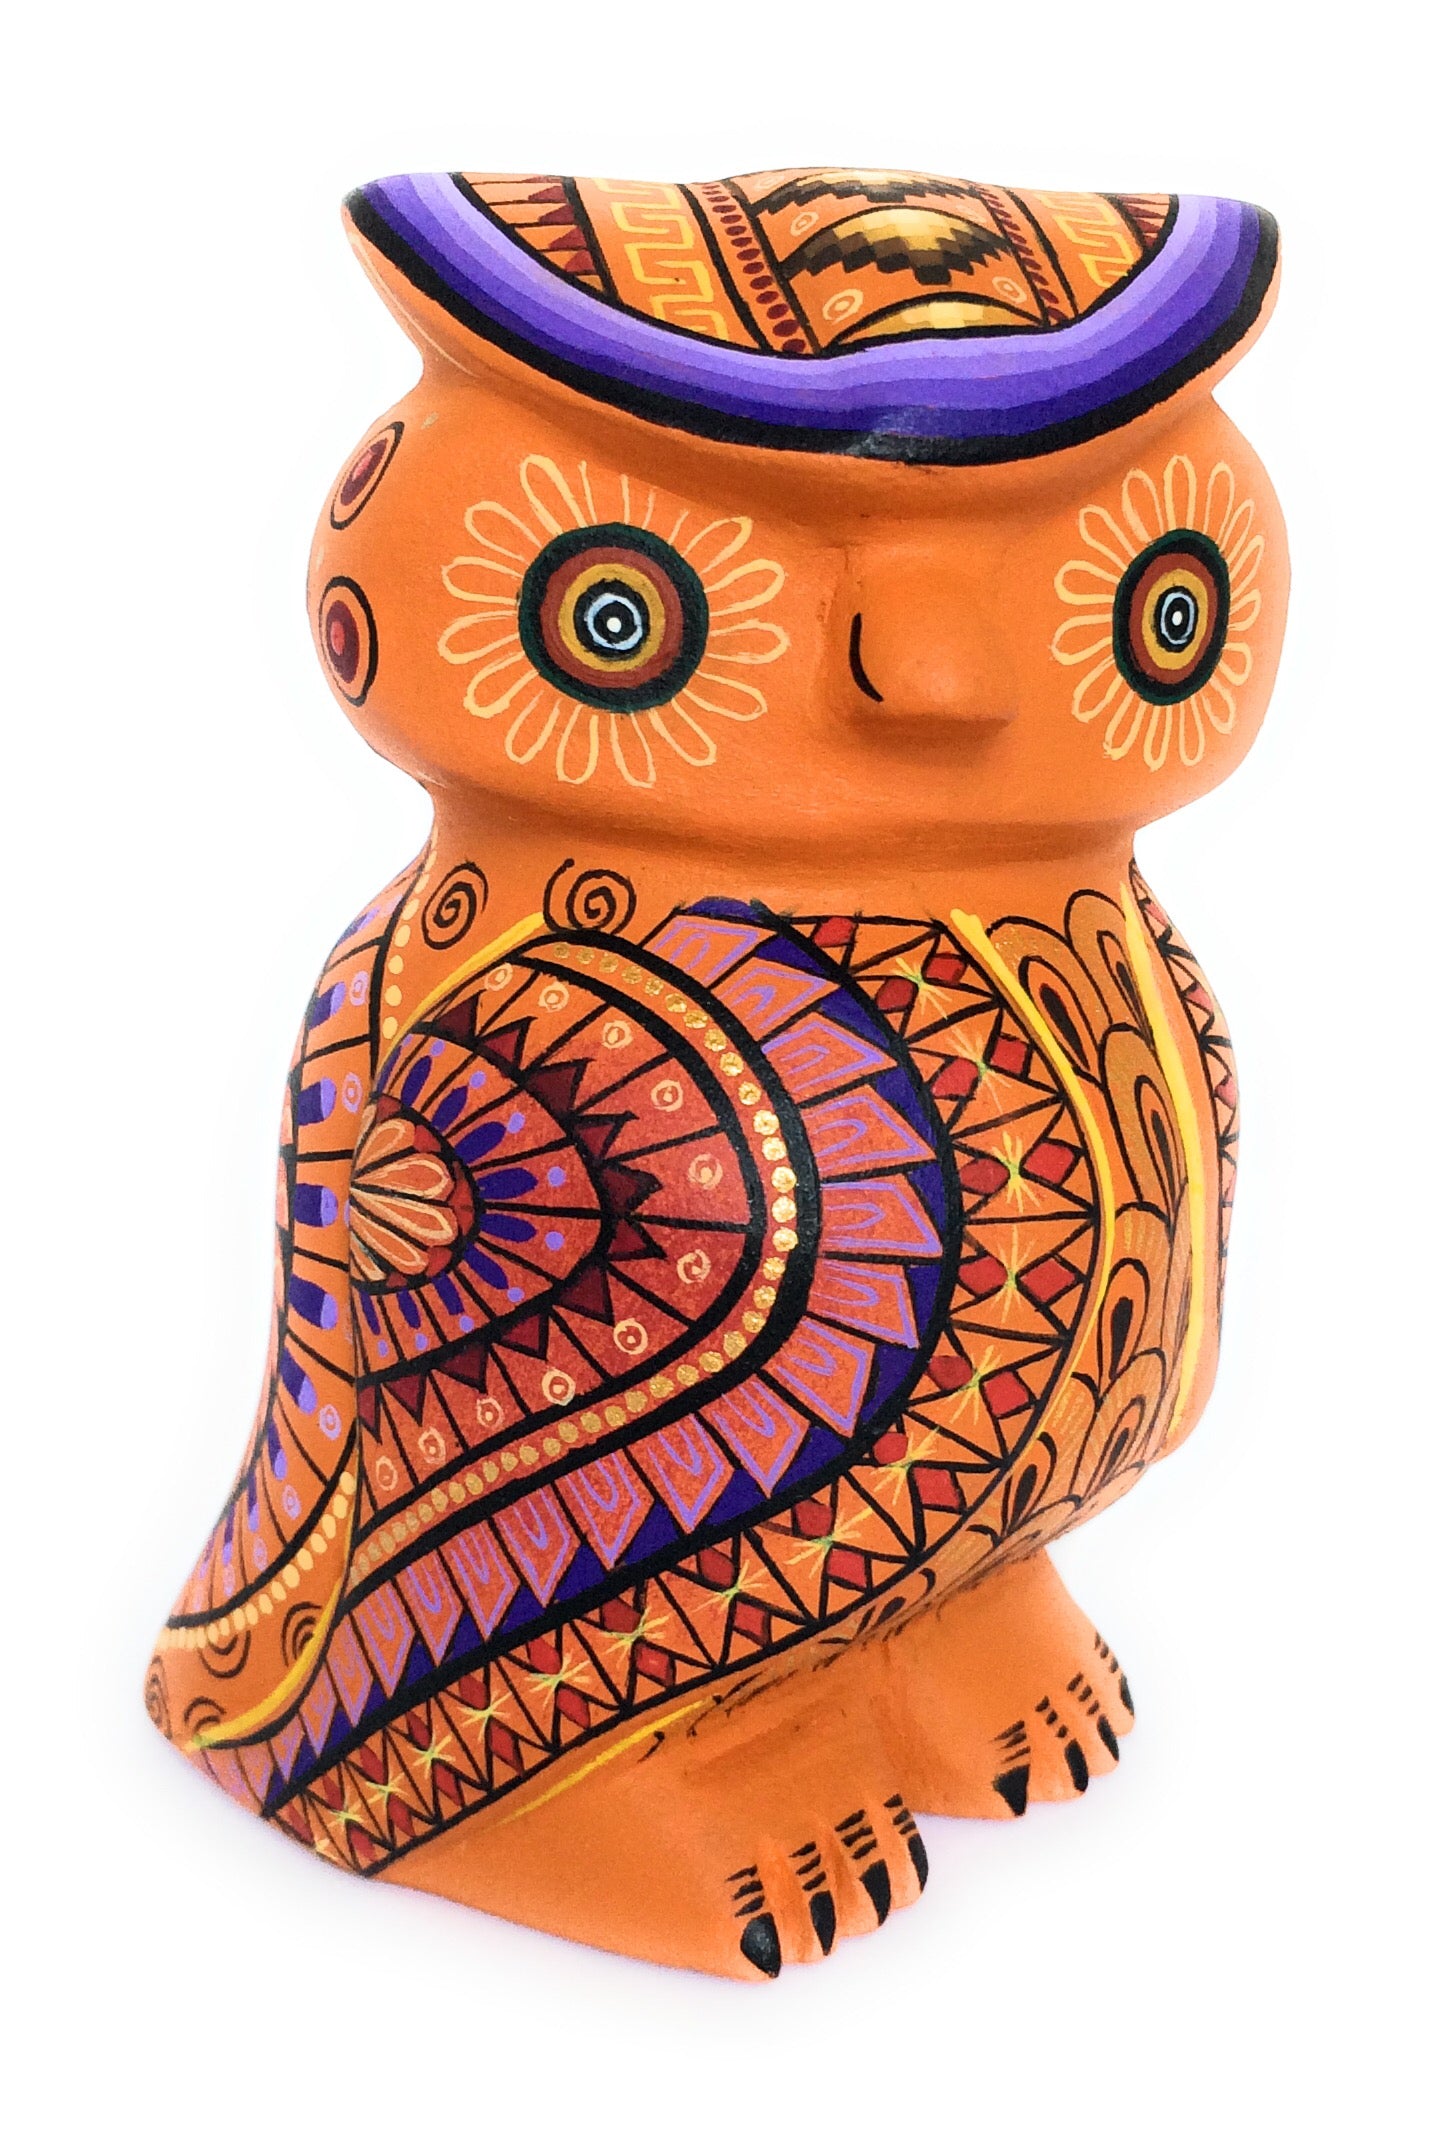 Mexican Owl Alebrije - The Little Pueblo